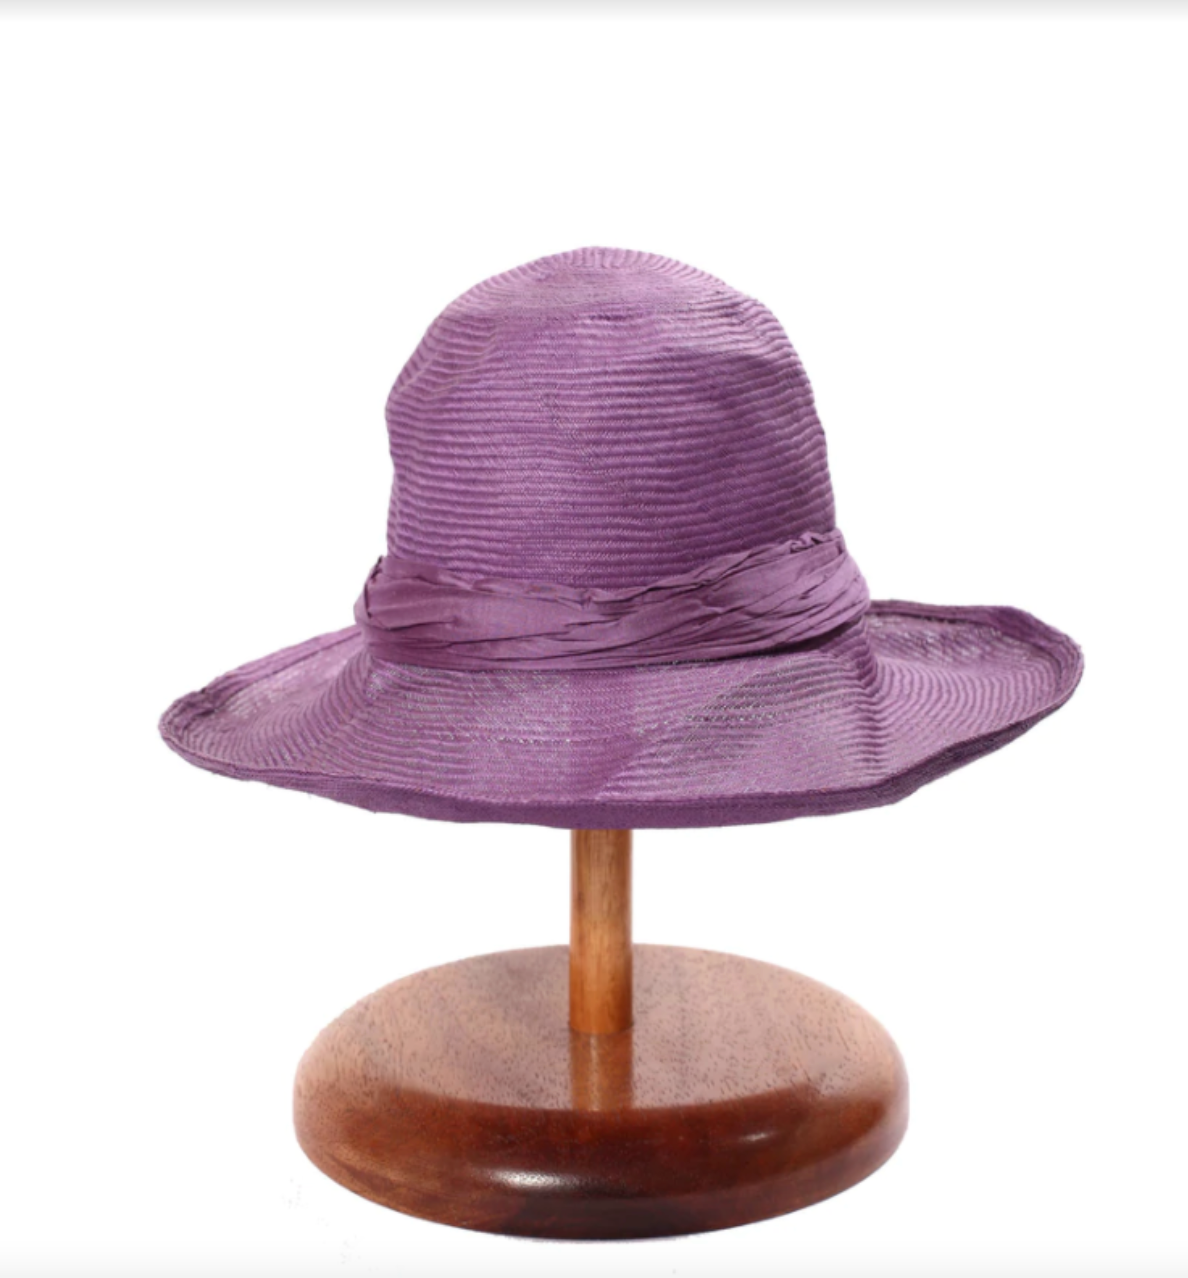 Neumann Straw Hats